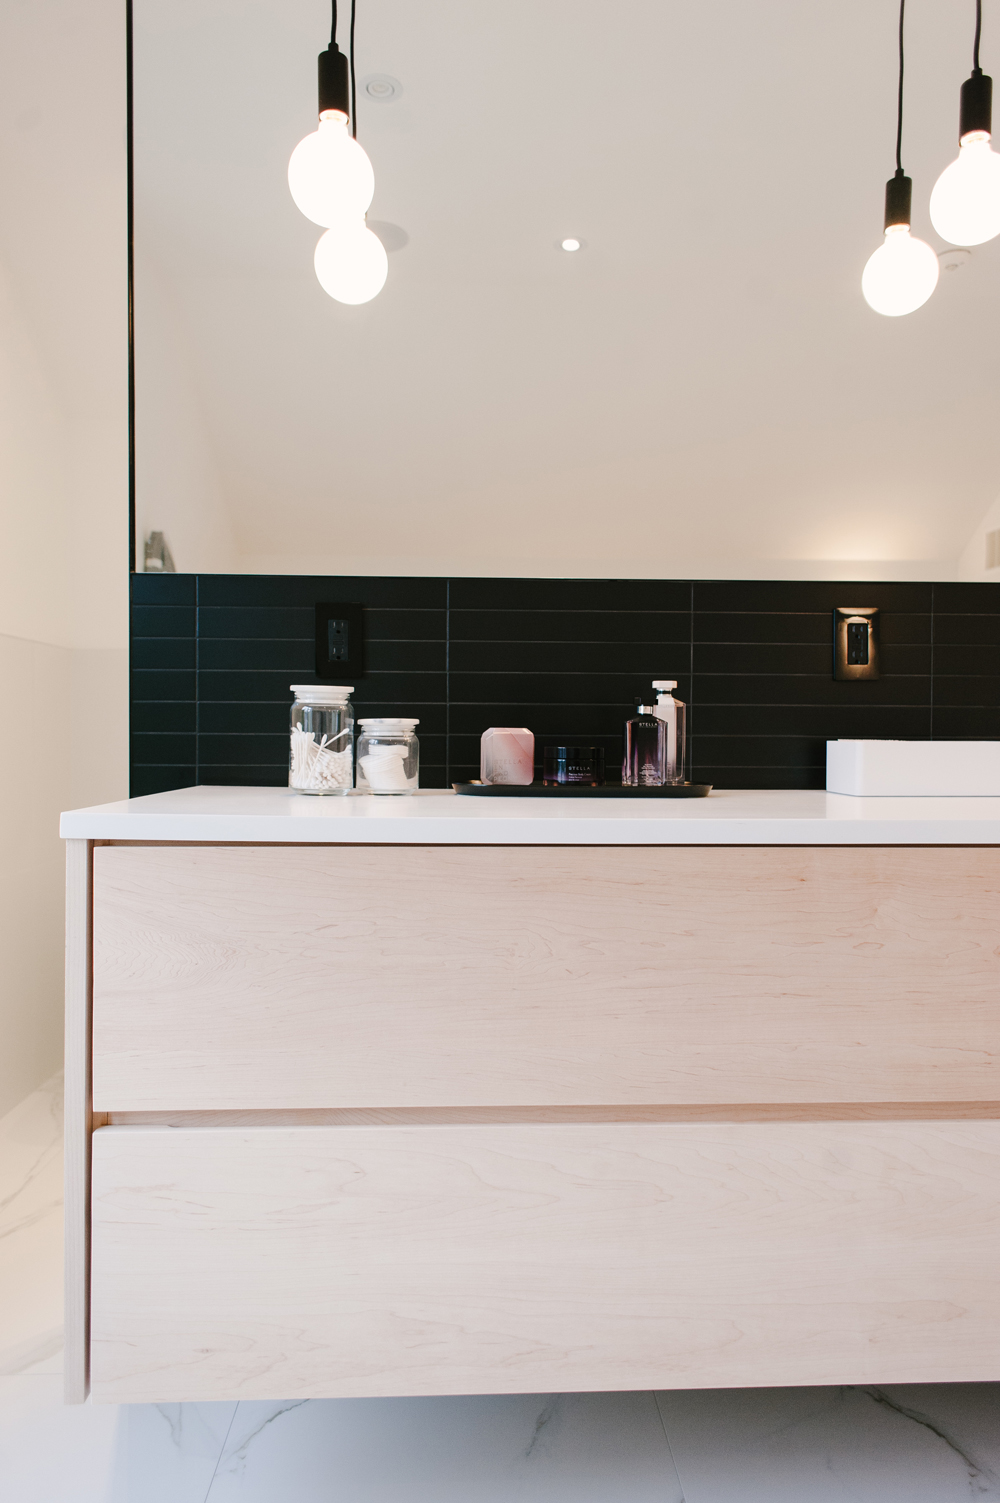 Floating wood vanity with black tile bathroom backsplash